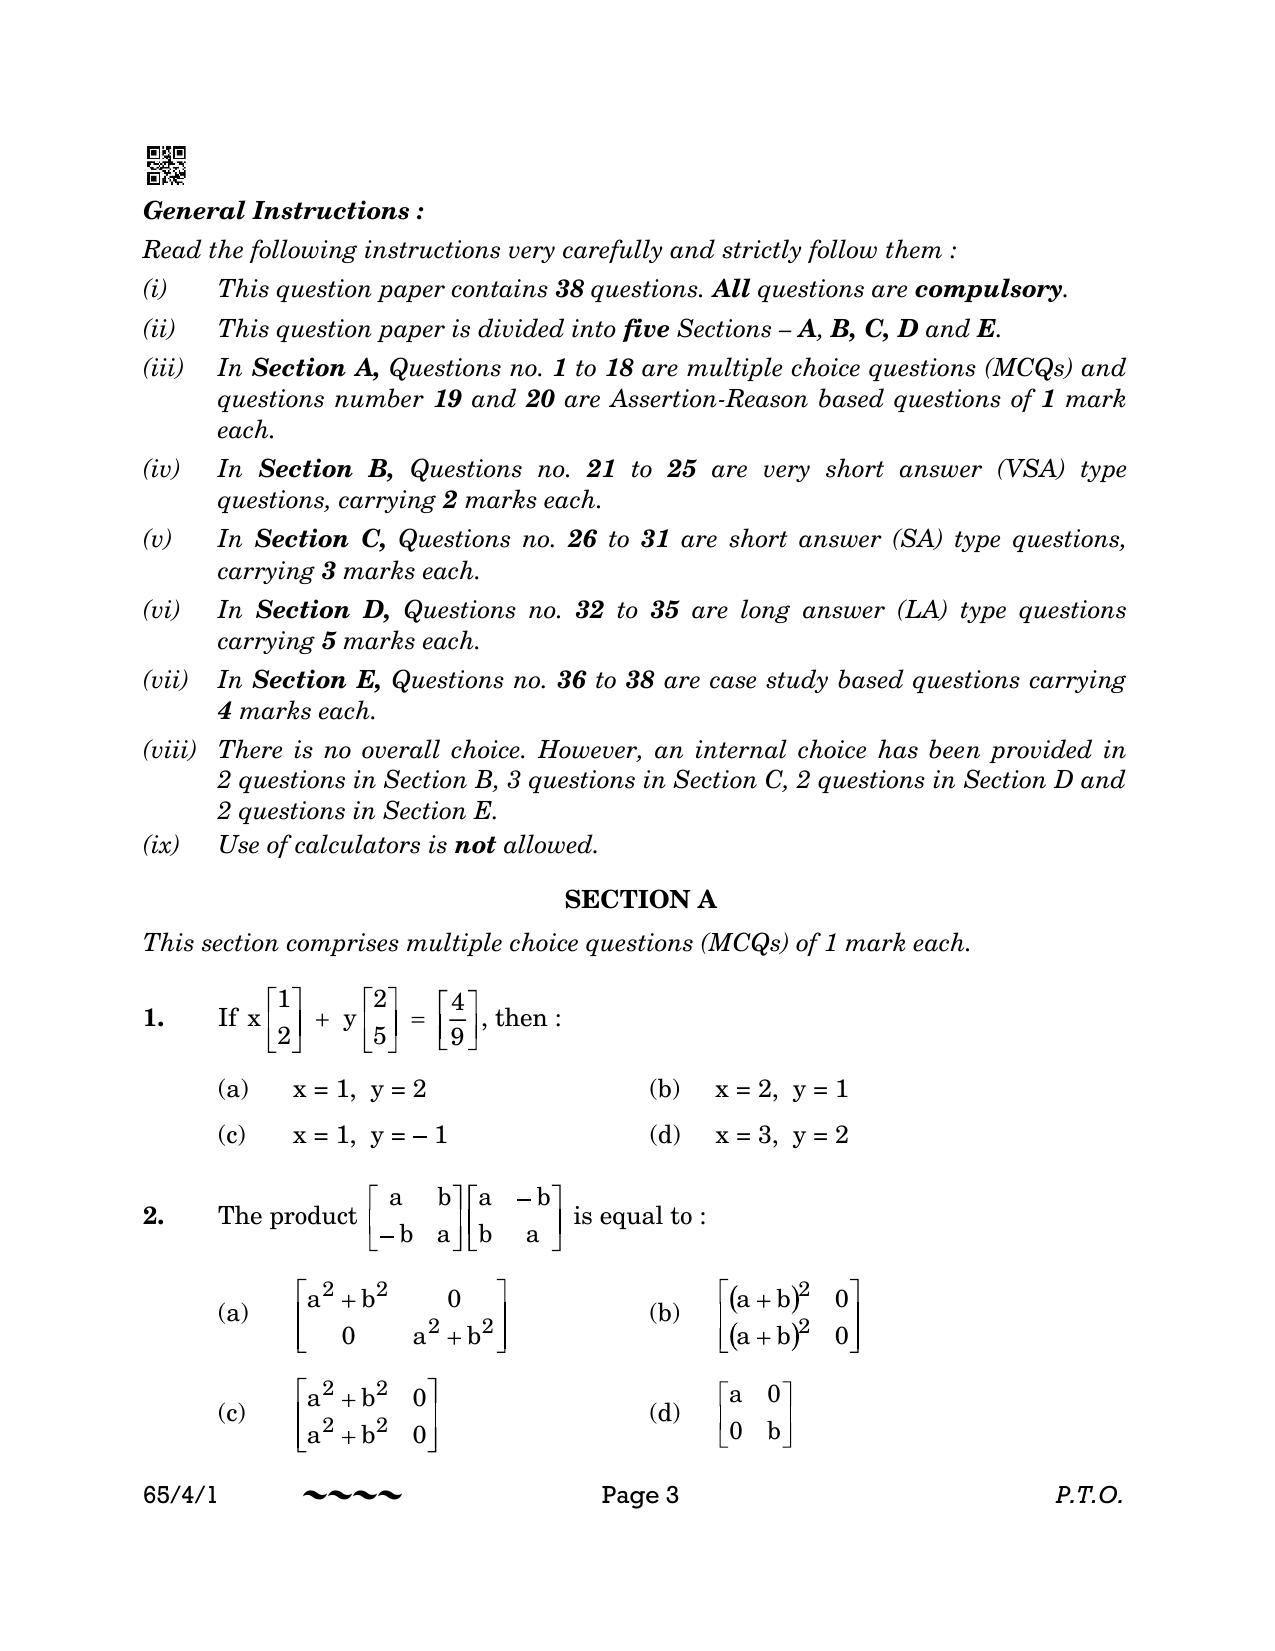 CBSE Class 12 65-4-1 MATHEMATICS 2023 Question Paper - Page 3